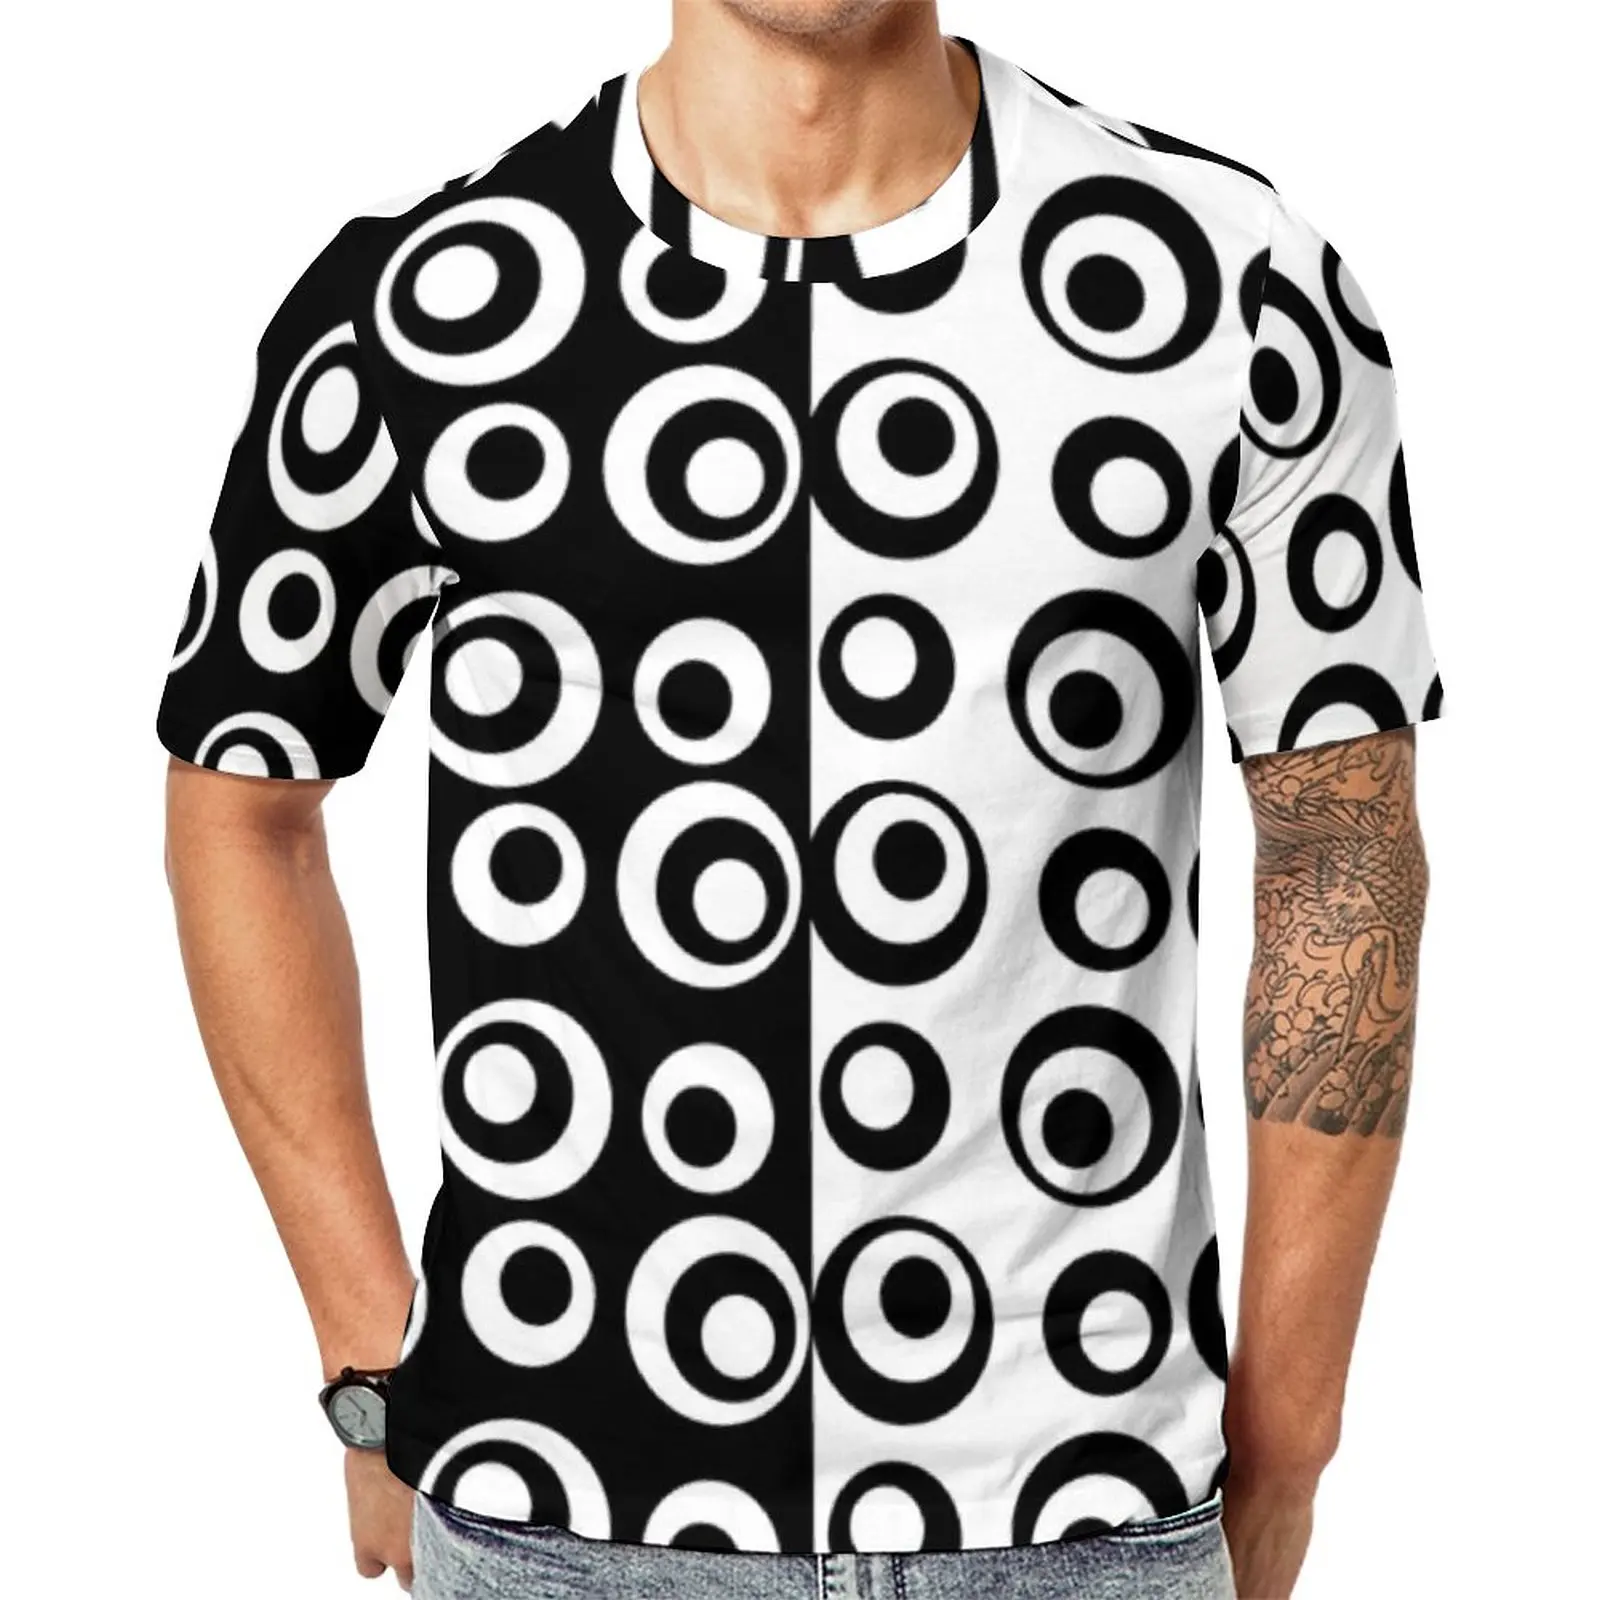 

Black And White Two Tone T-Shirt Mod Love Circles Dots Popular T-Shirts Short Sleeve Printed Tops Cheap Summer Fun Big Size Tees